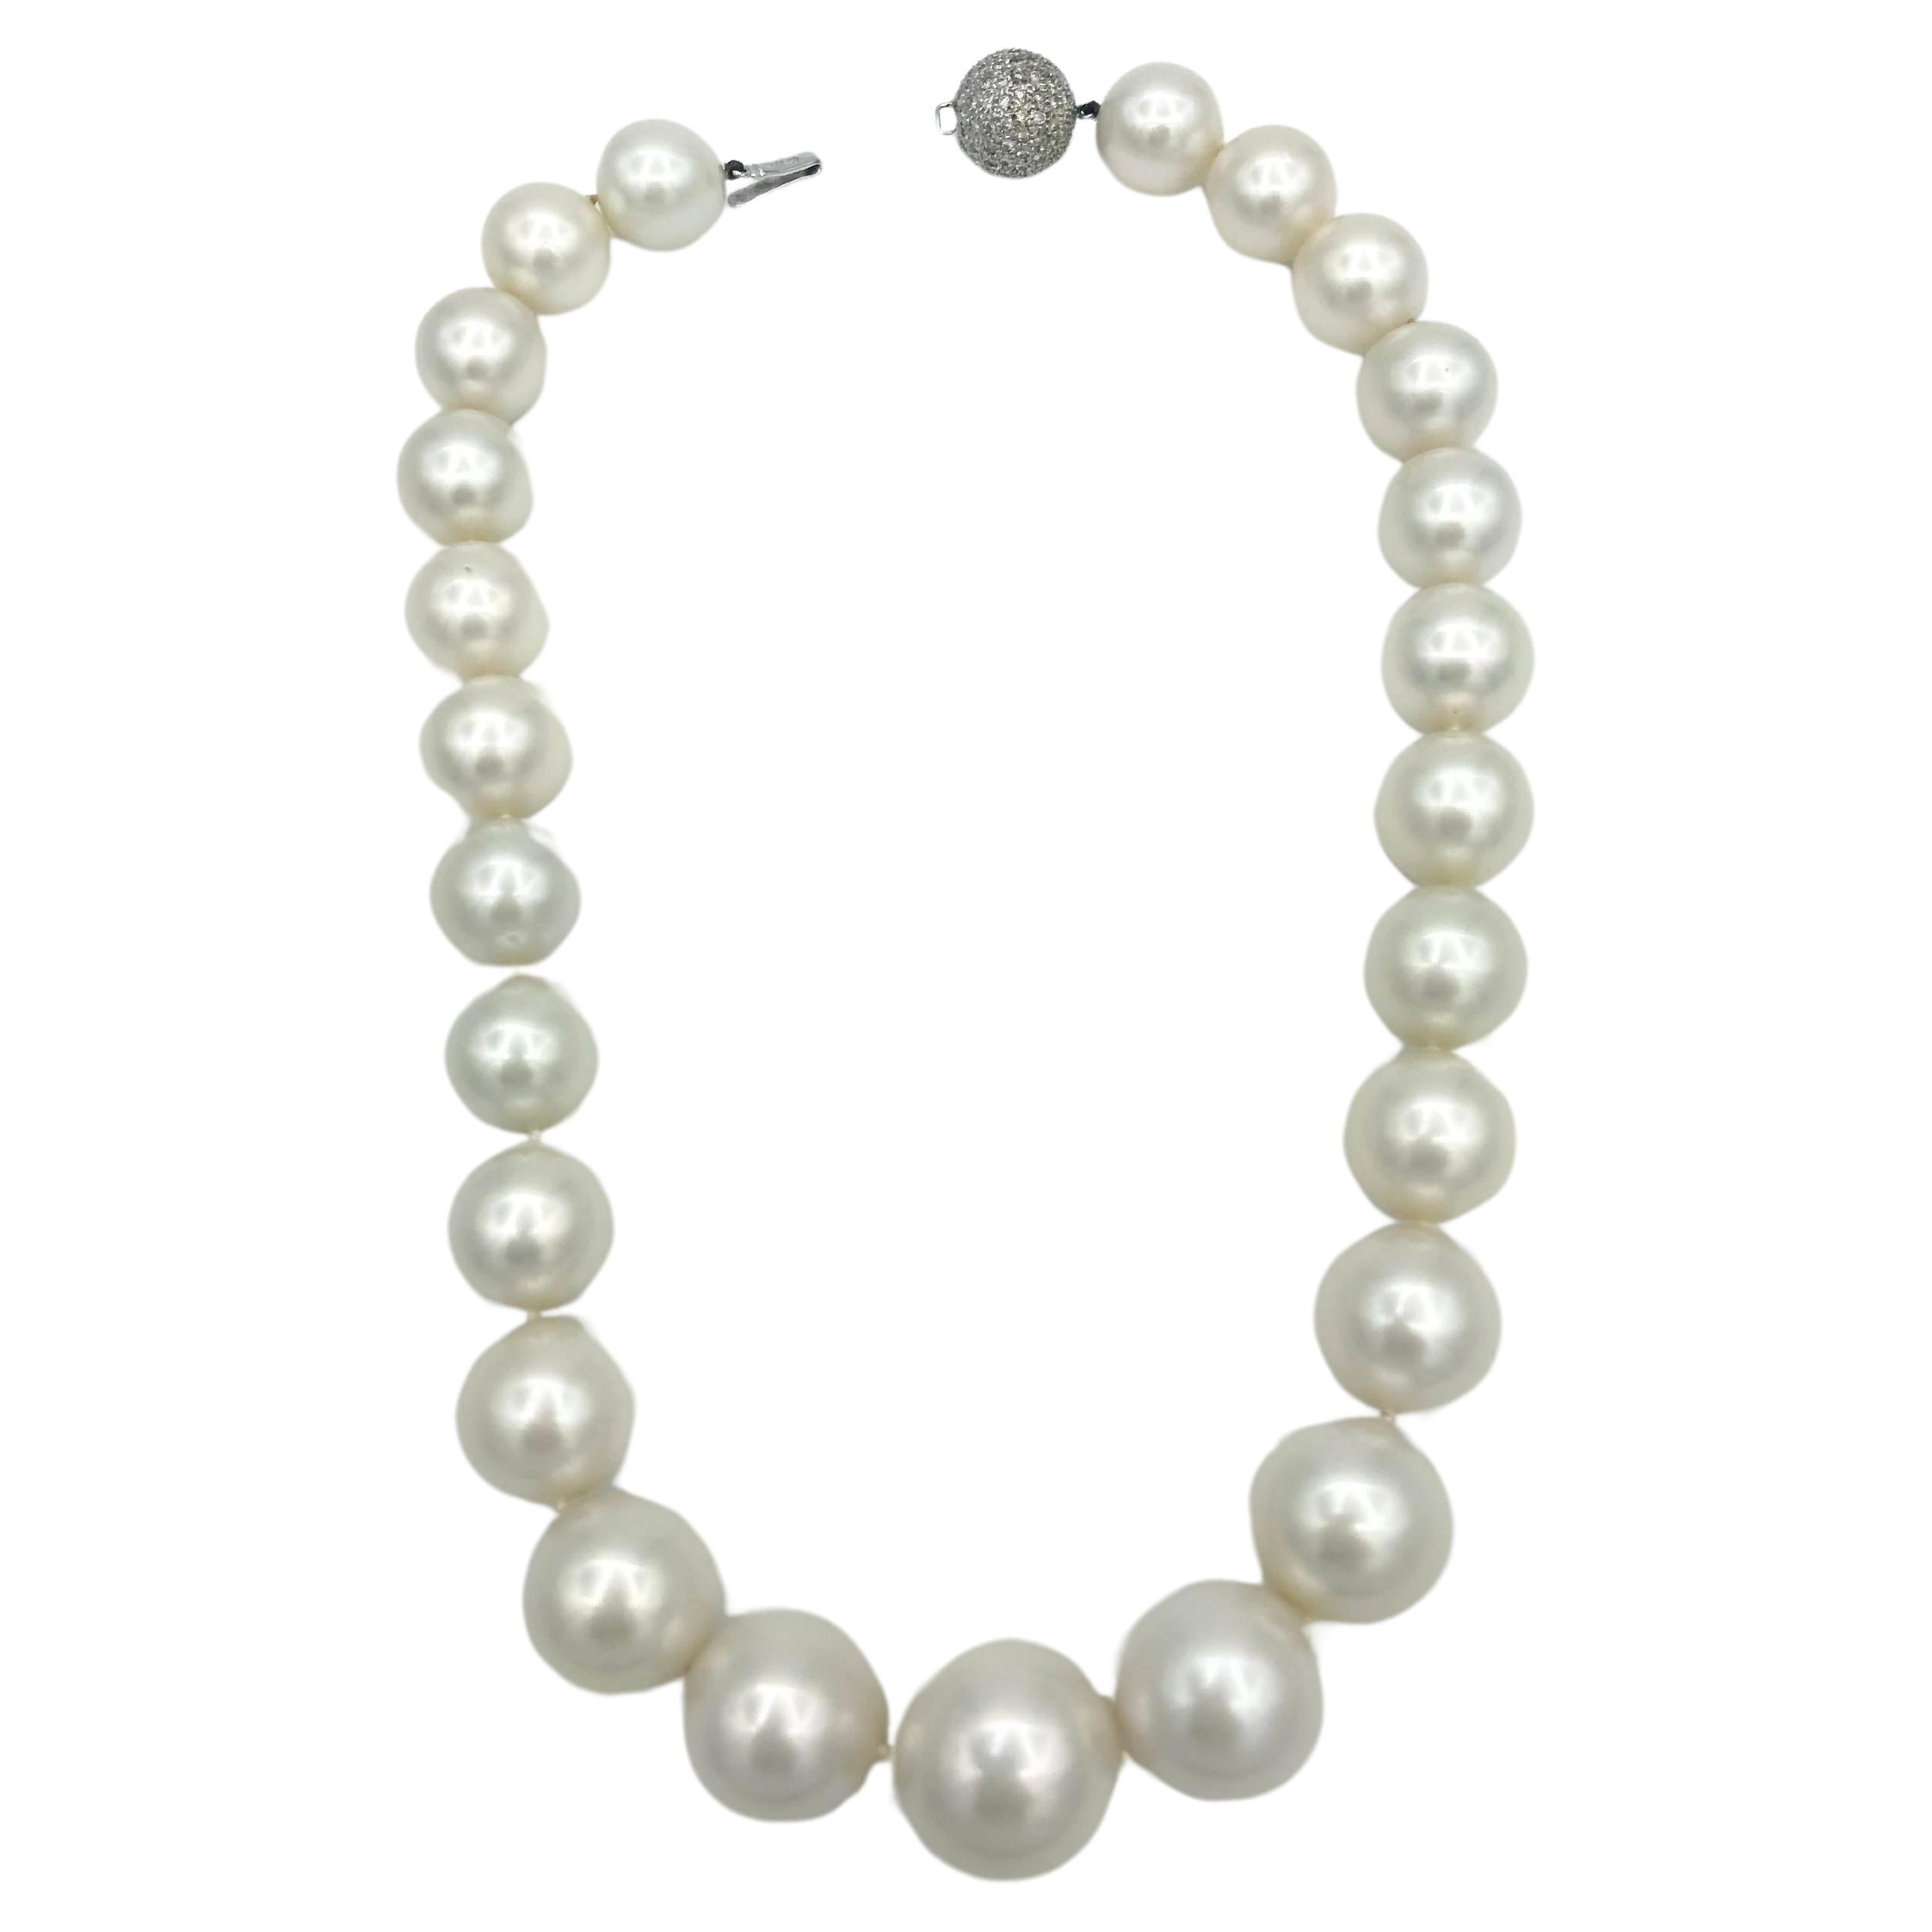 Rare 15-20mm South Sea Pearl Necklace